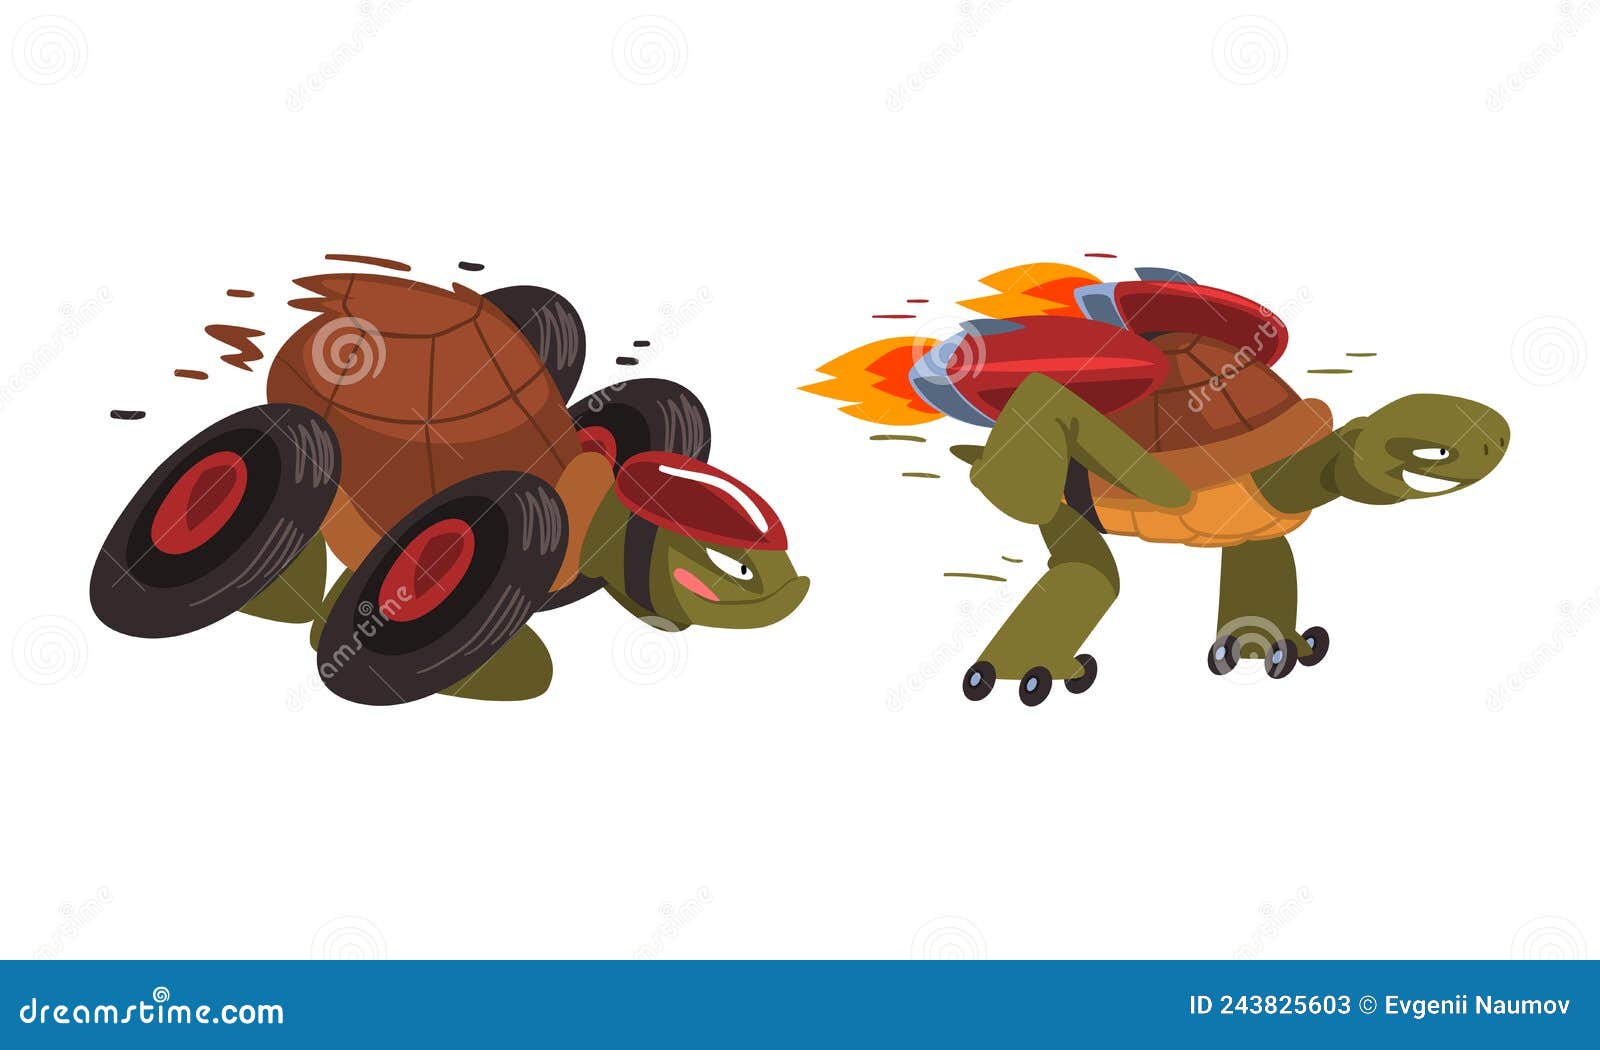 https://thumbs.dreamstime.com/z/funny-fast-turtles-wheels-cartoon-vector-illustration-isolated-white-background-funny-fast-turtles-wheels-cartoon-vector-243825603.jpg